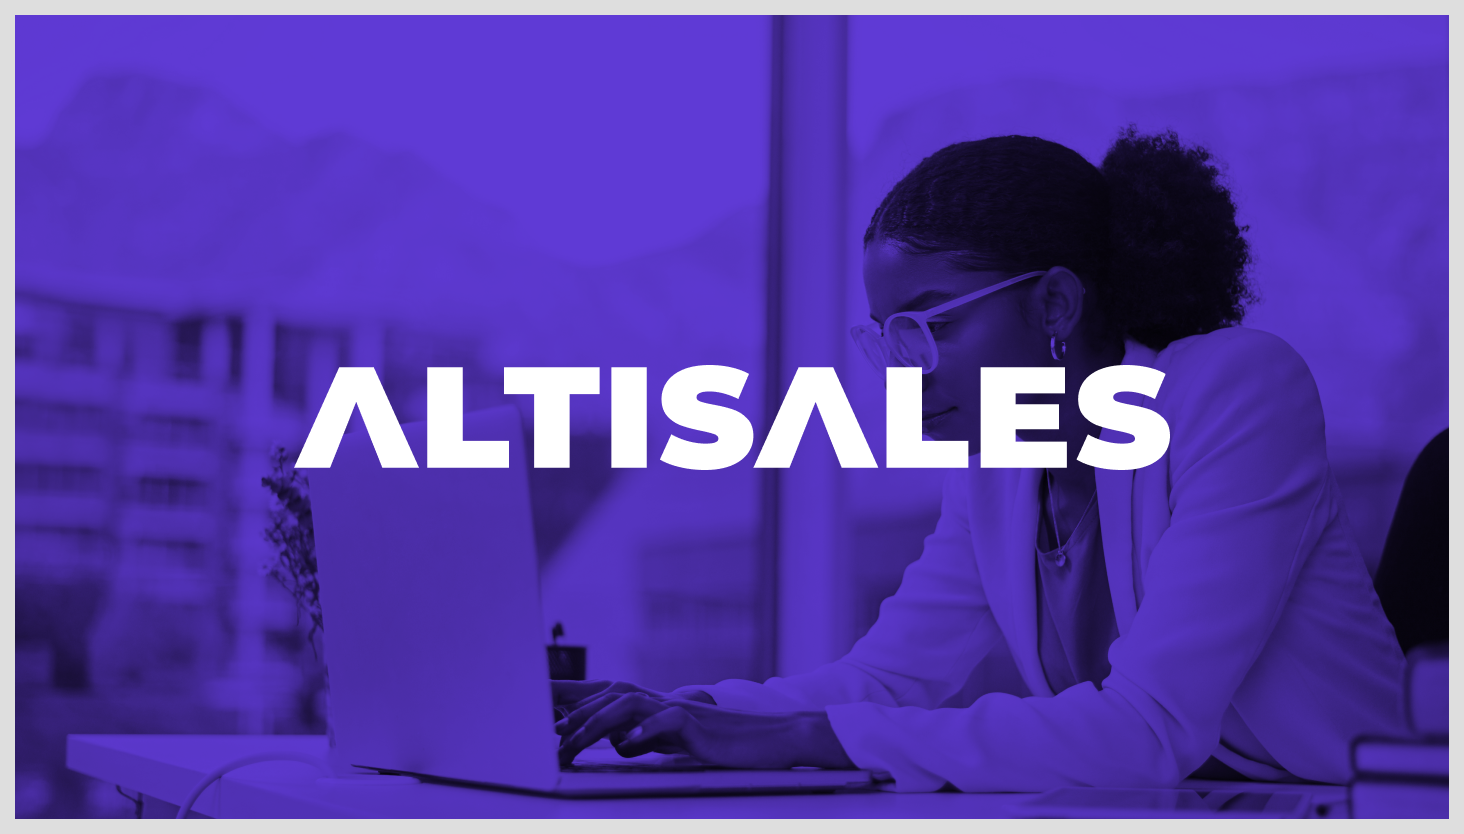 AltiSales logo on a purple background